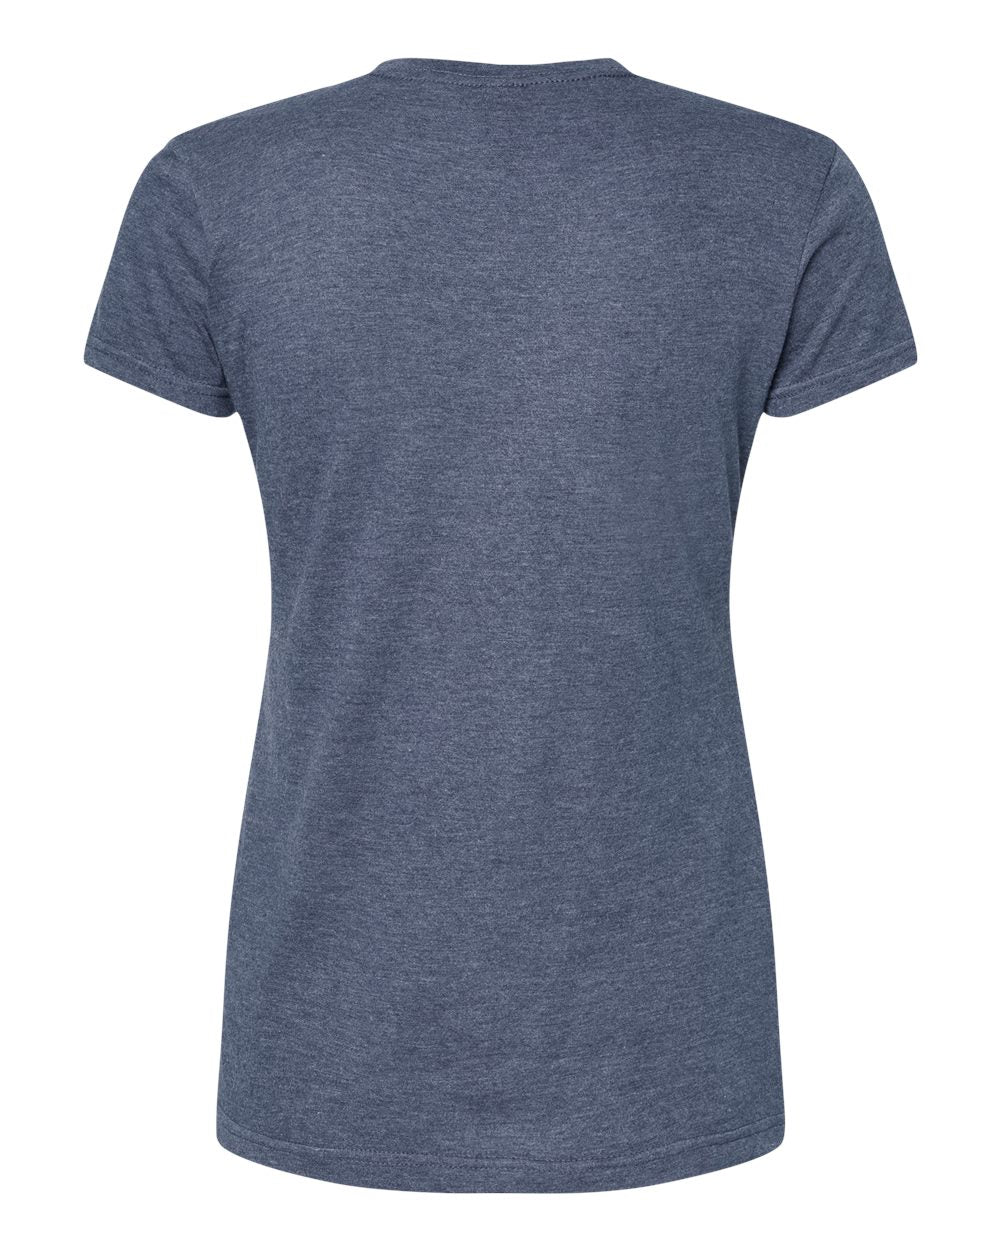 M&O Women's Fine Jersey T-Shirt 4513 #color_Heather Navy